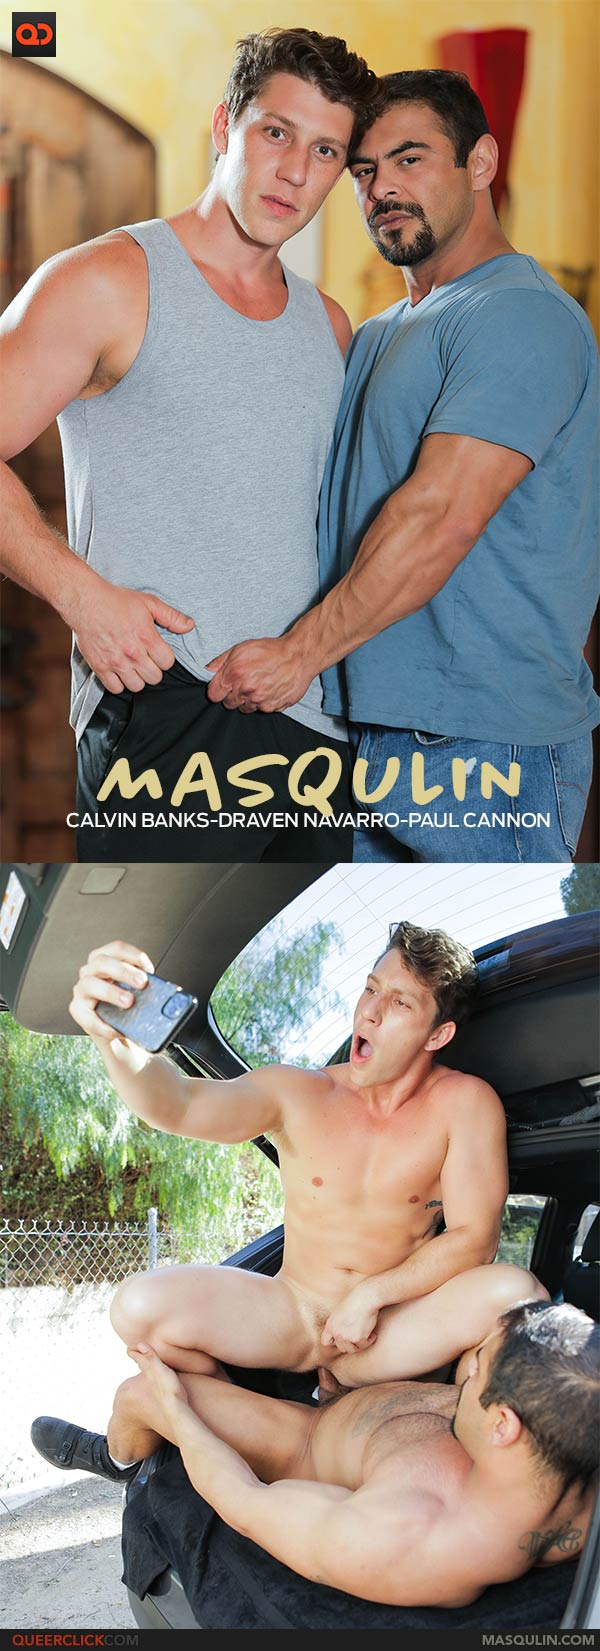 Masqulin: Calvin Banks, Draven Navarro and Paul Cannon - Social Pressure, Part 2